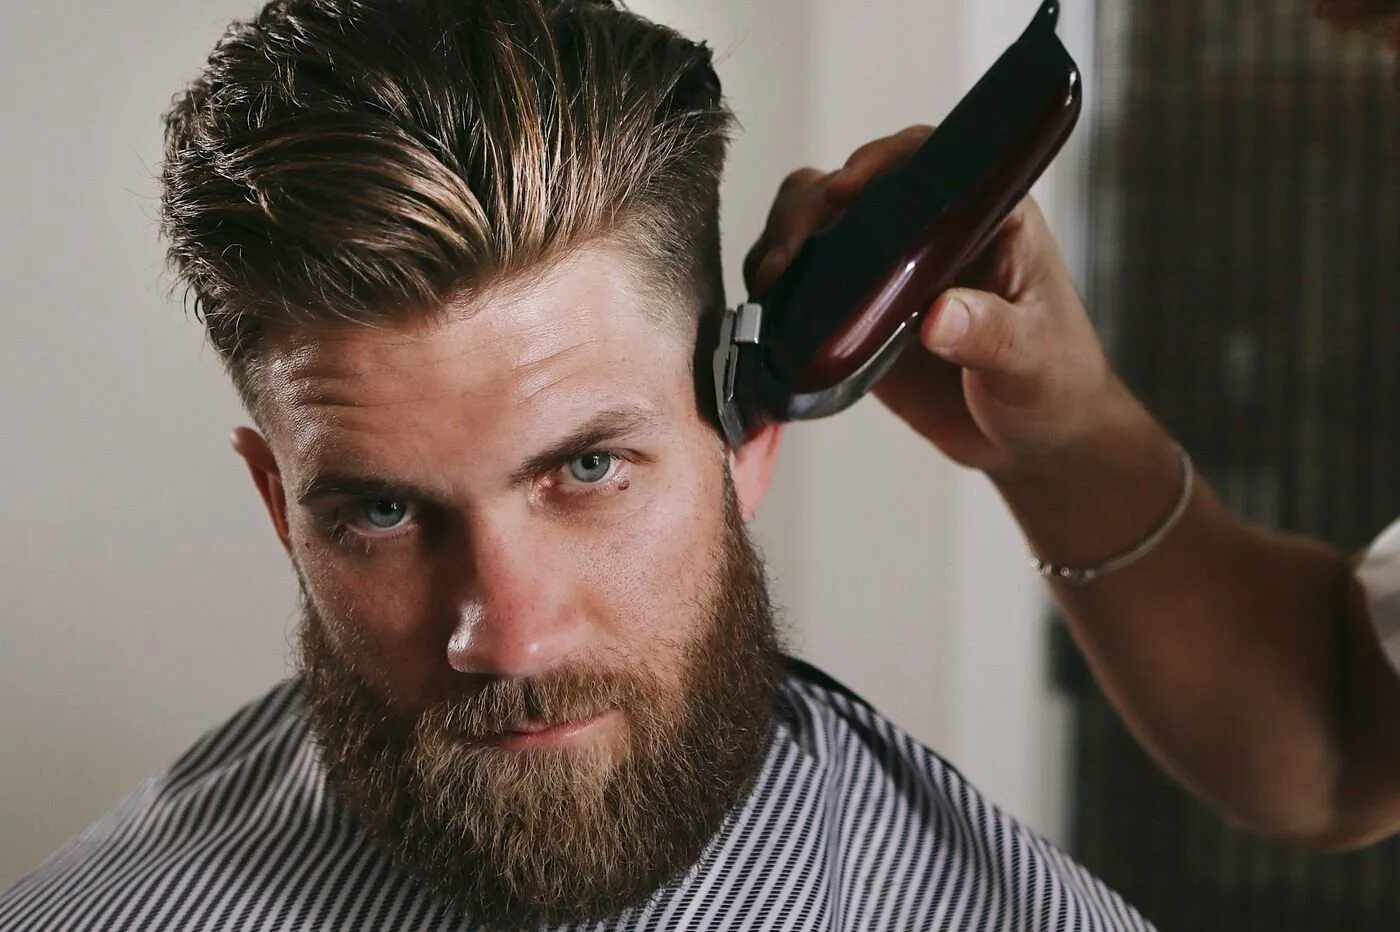 Подстричь мужчину дома. Мужские стрижки. Барбер стрижки мужские. Парикмахерская мужская стрижка борода. Мужские прически в барбершопе.